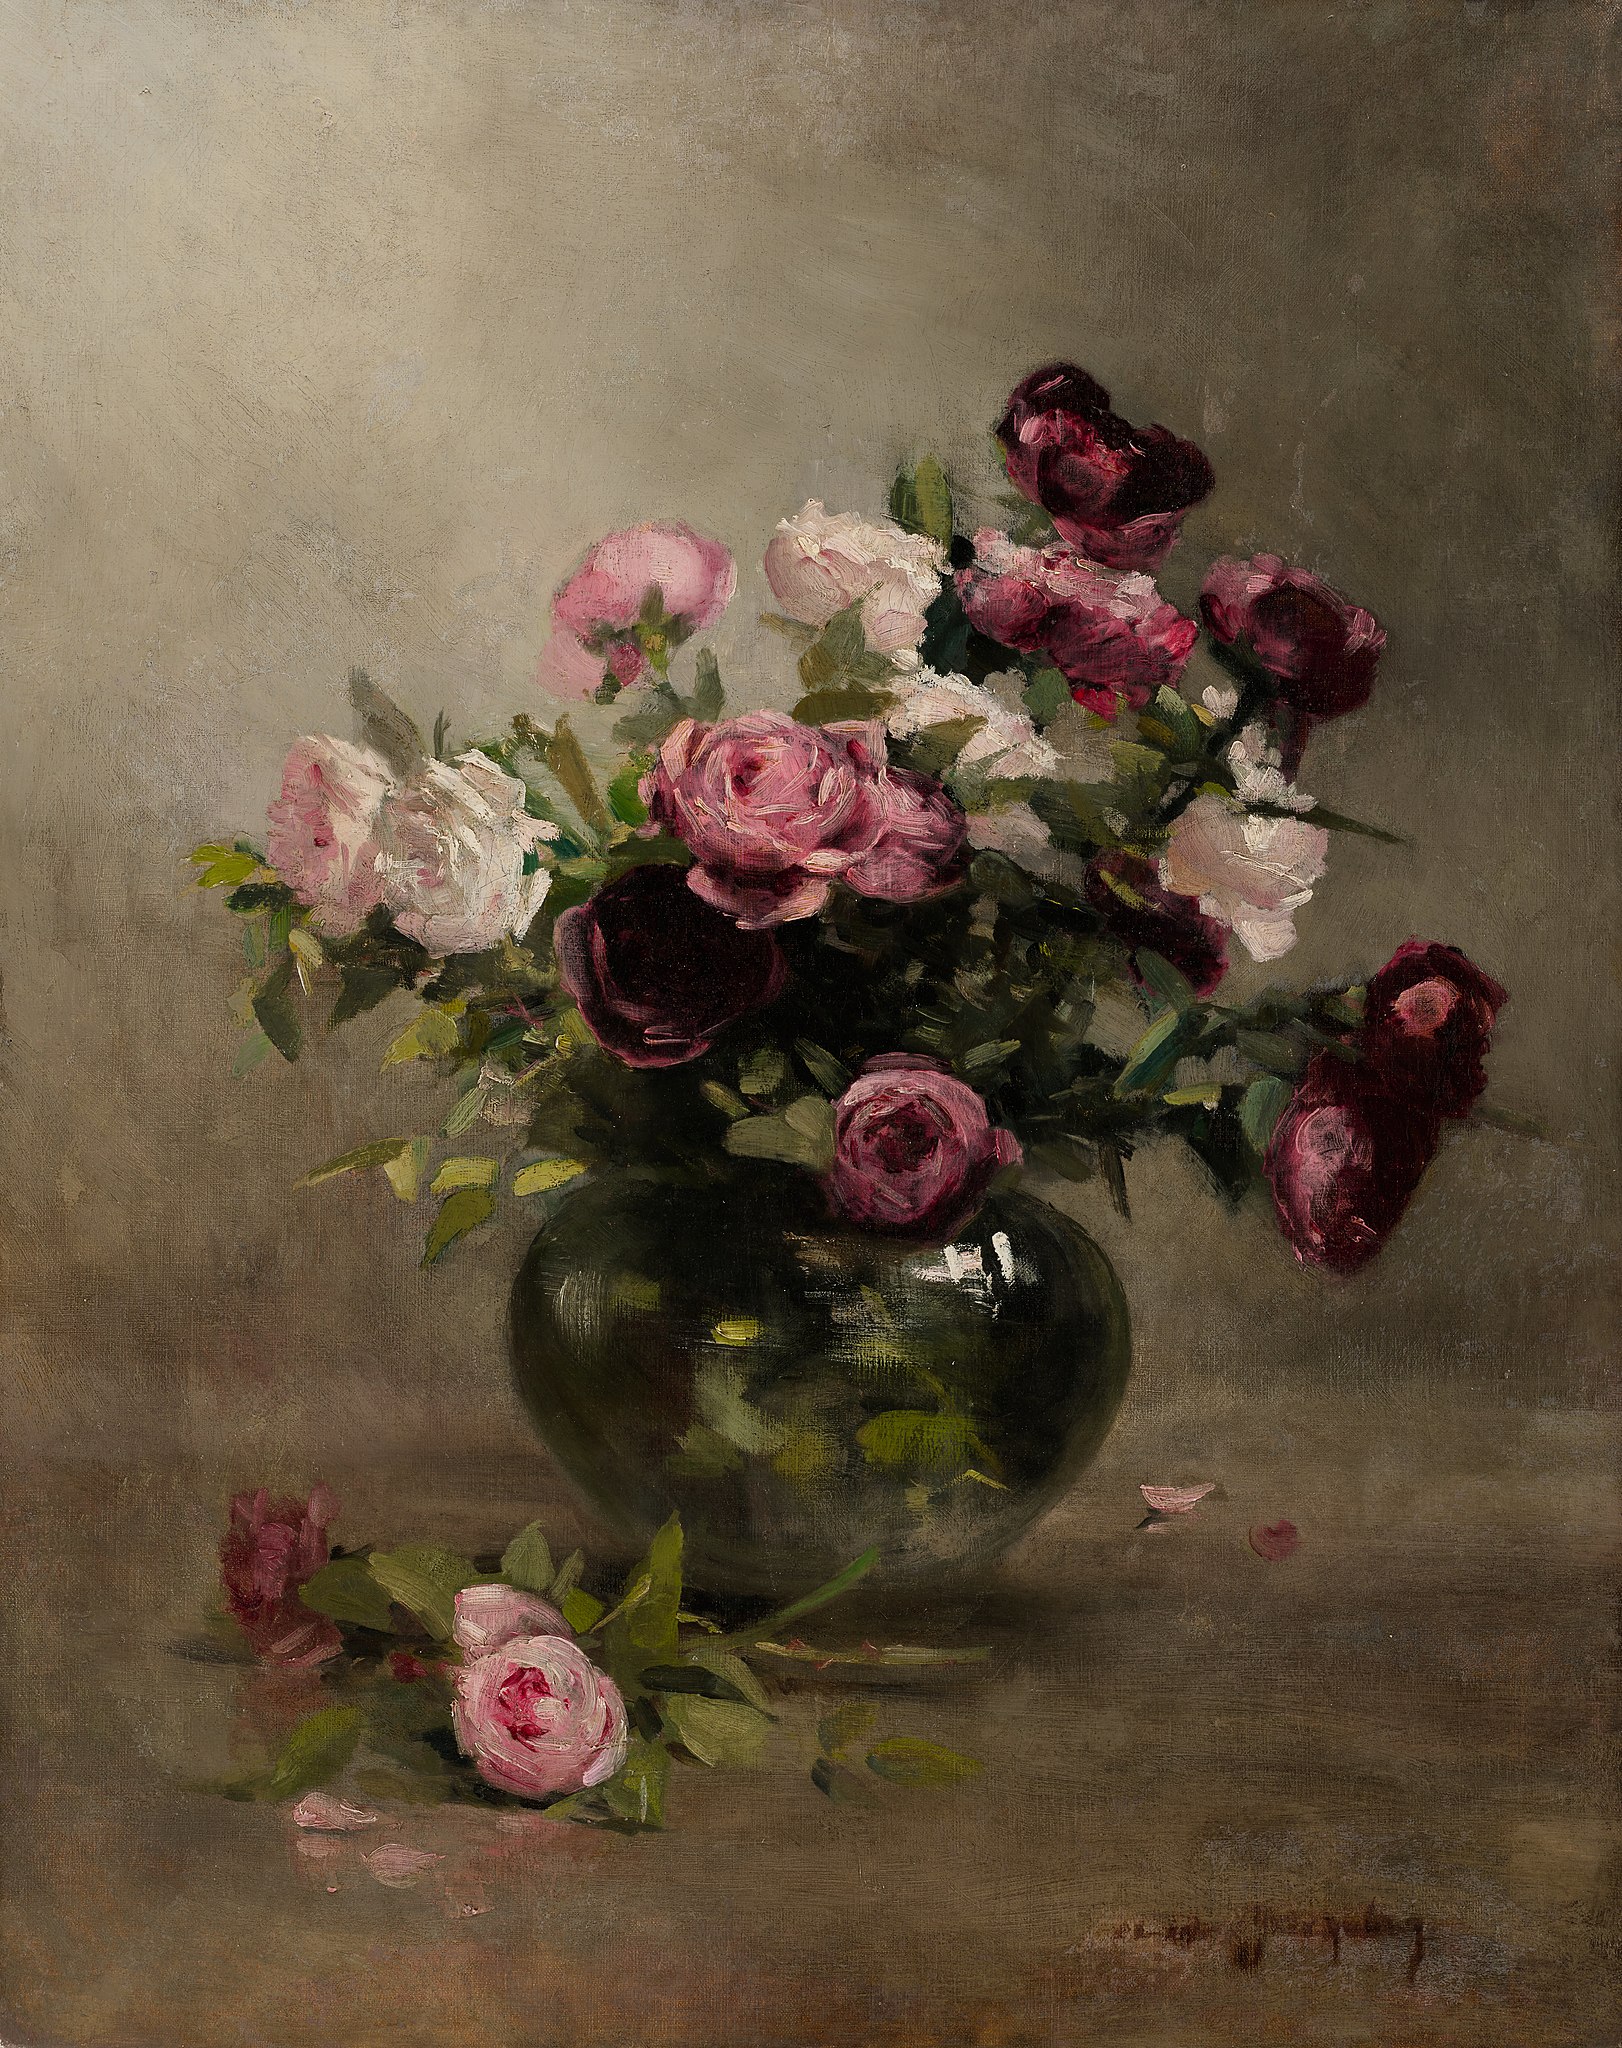 Vase of Roses by Eva Gonzalès - early 1870s - 79.85 × 63.34 cm Minneapolis Institute of Art